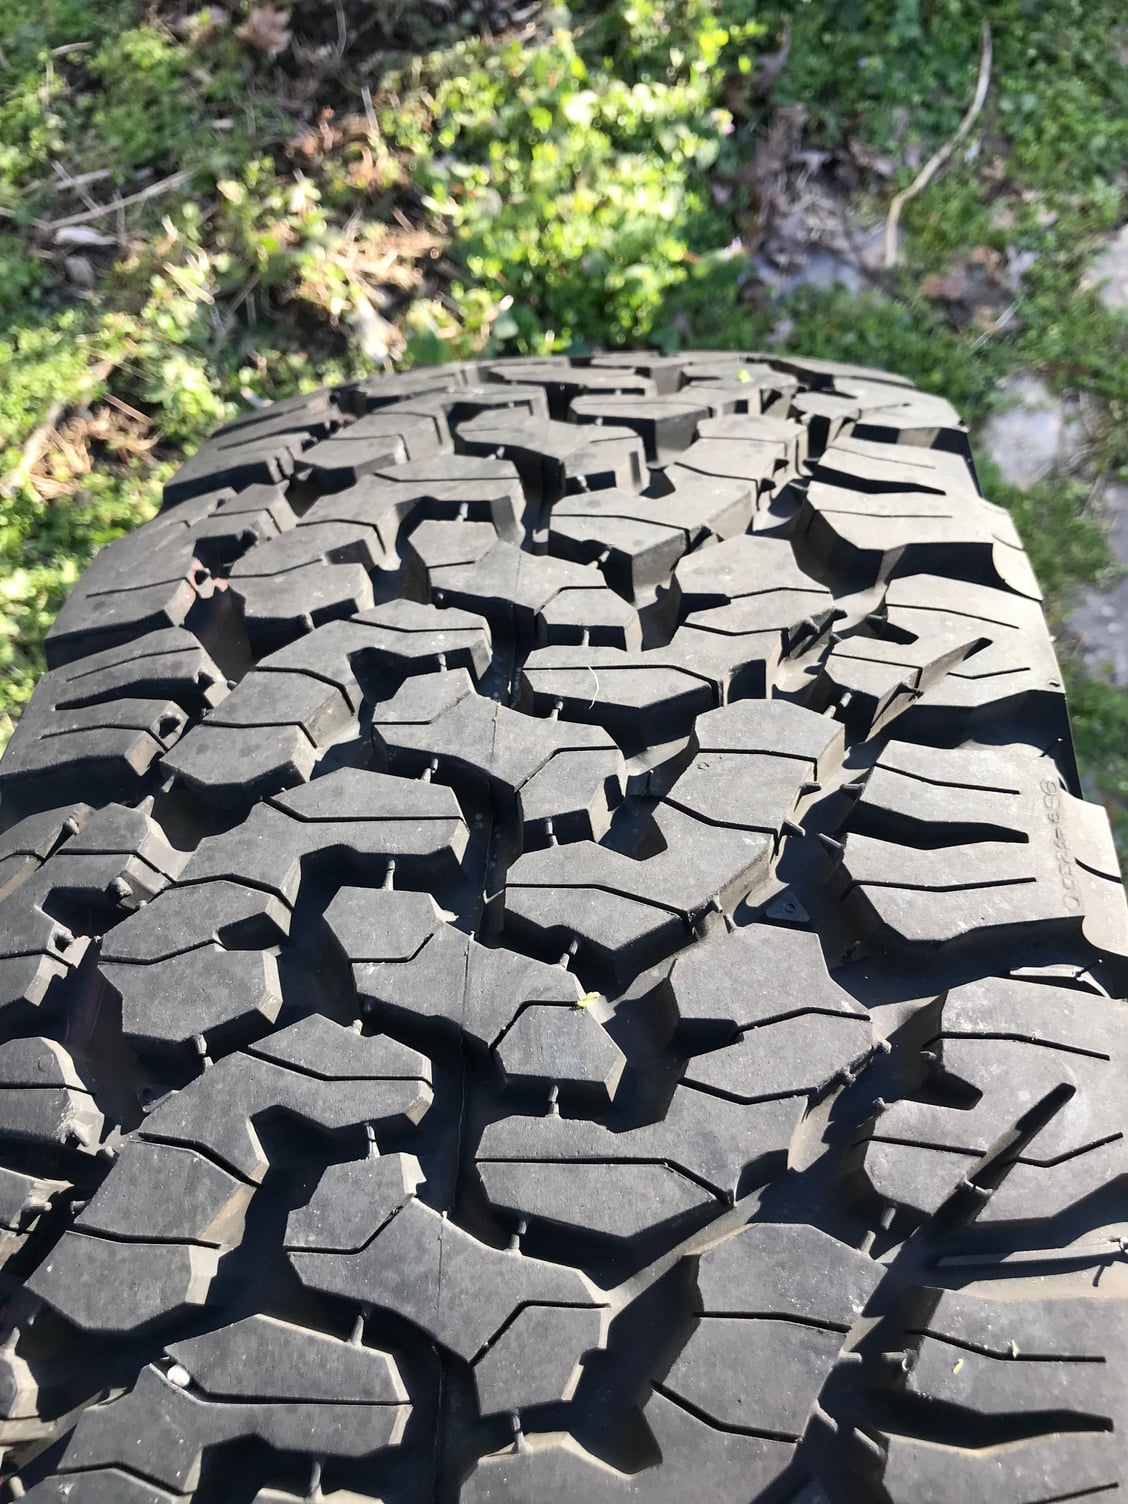 Wheels and Tires/Axles - 5x 285/70/r17 JLUR Take offs - BF Goodrich KO2's - 1,100 miles $750 - Used - Richmond, VA 23233, United States